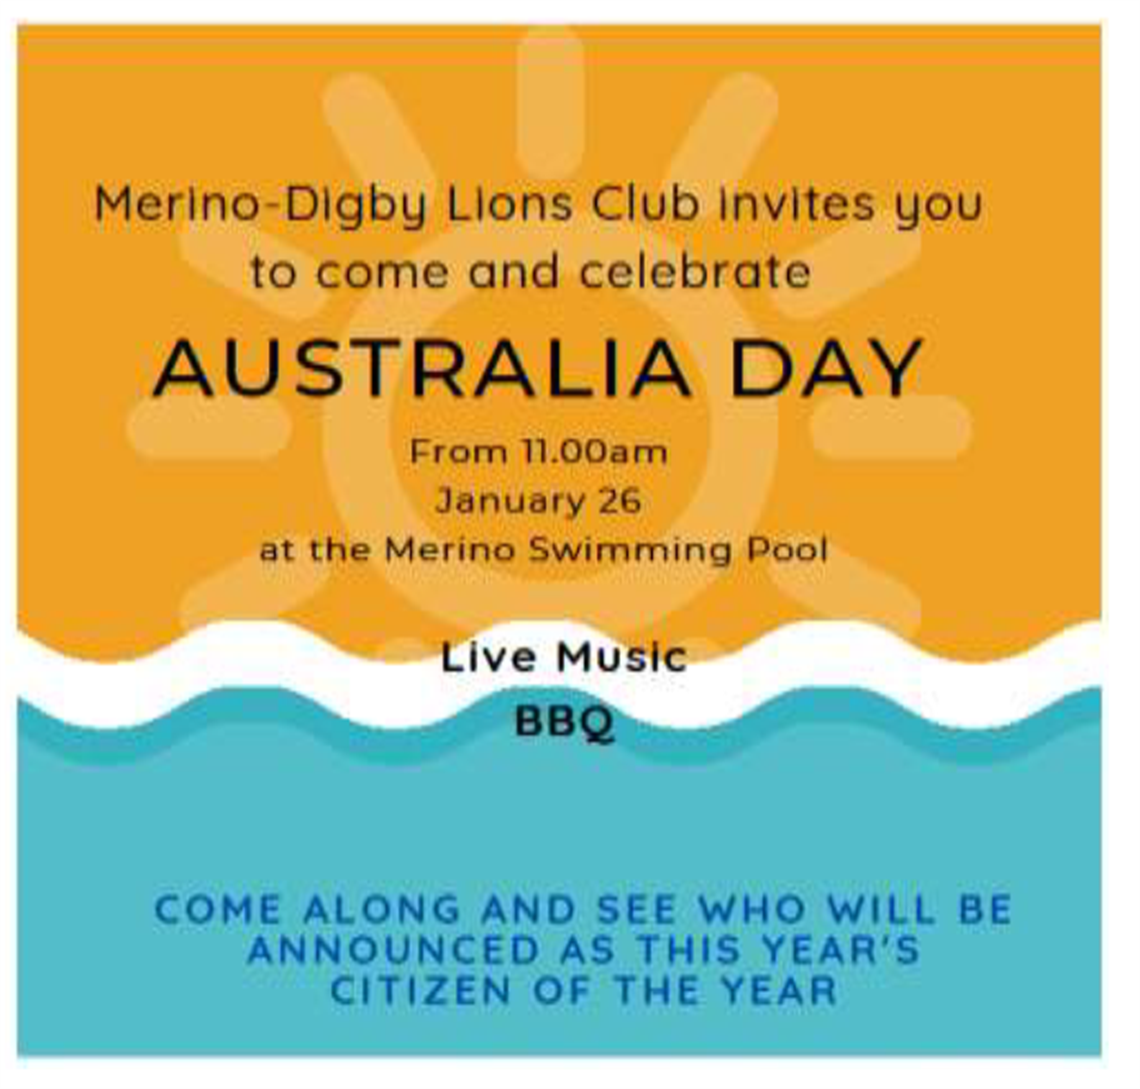 Australia Day details